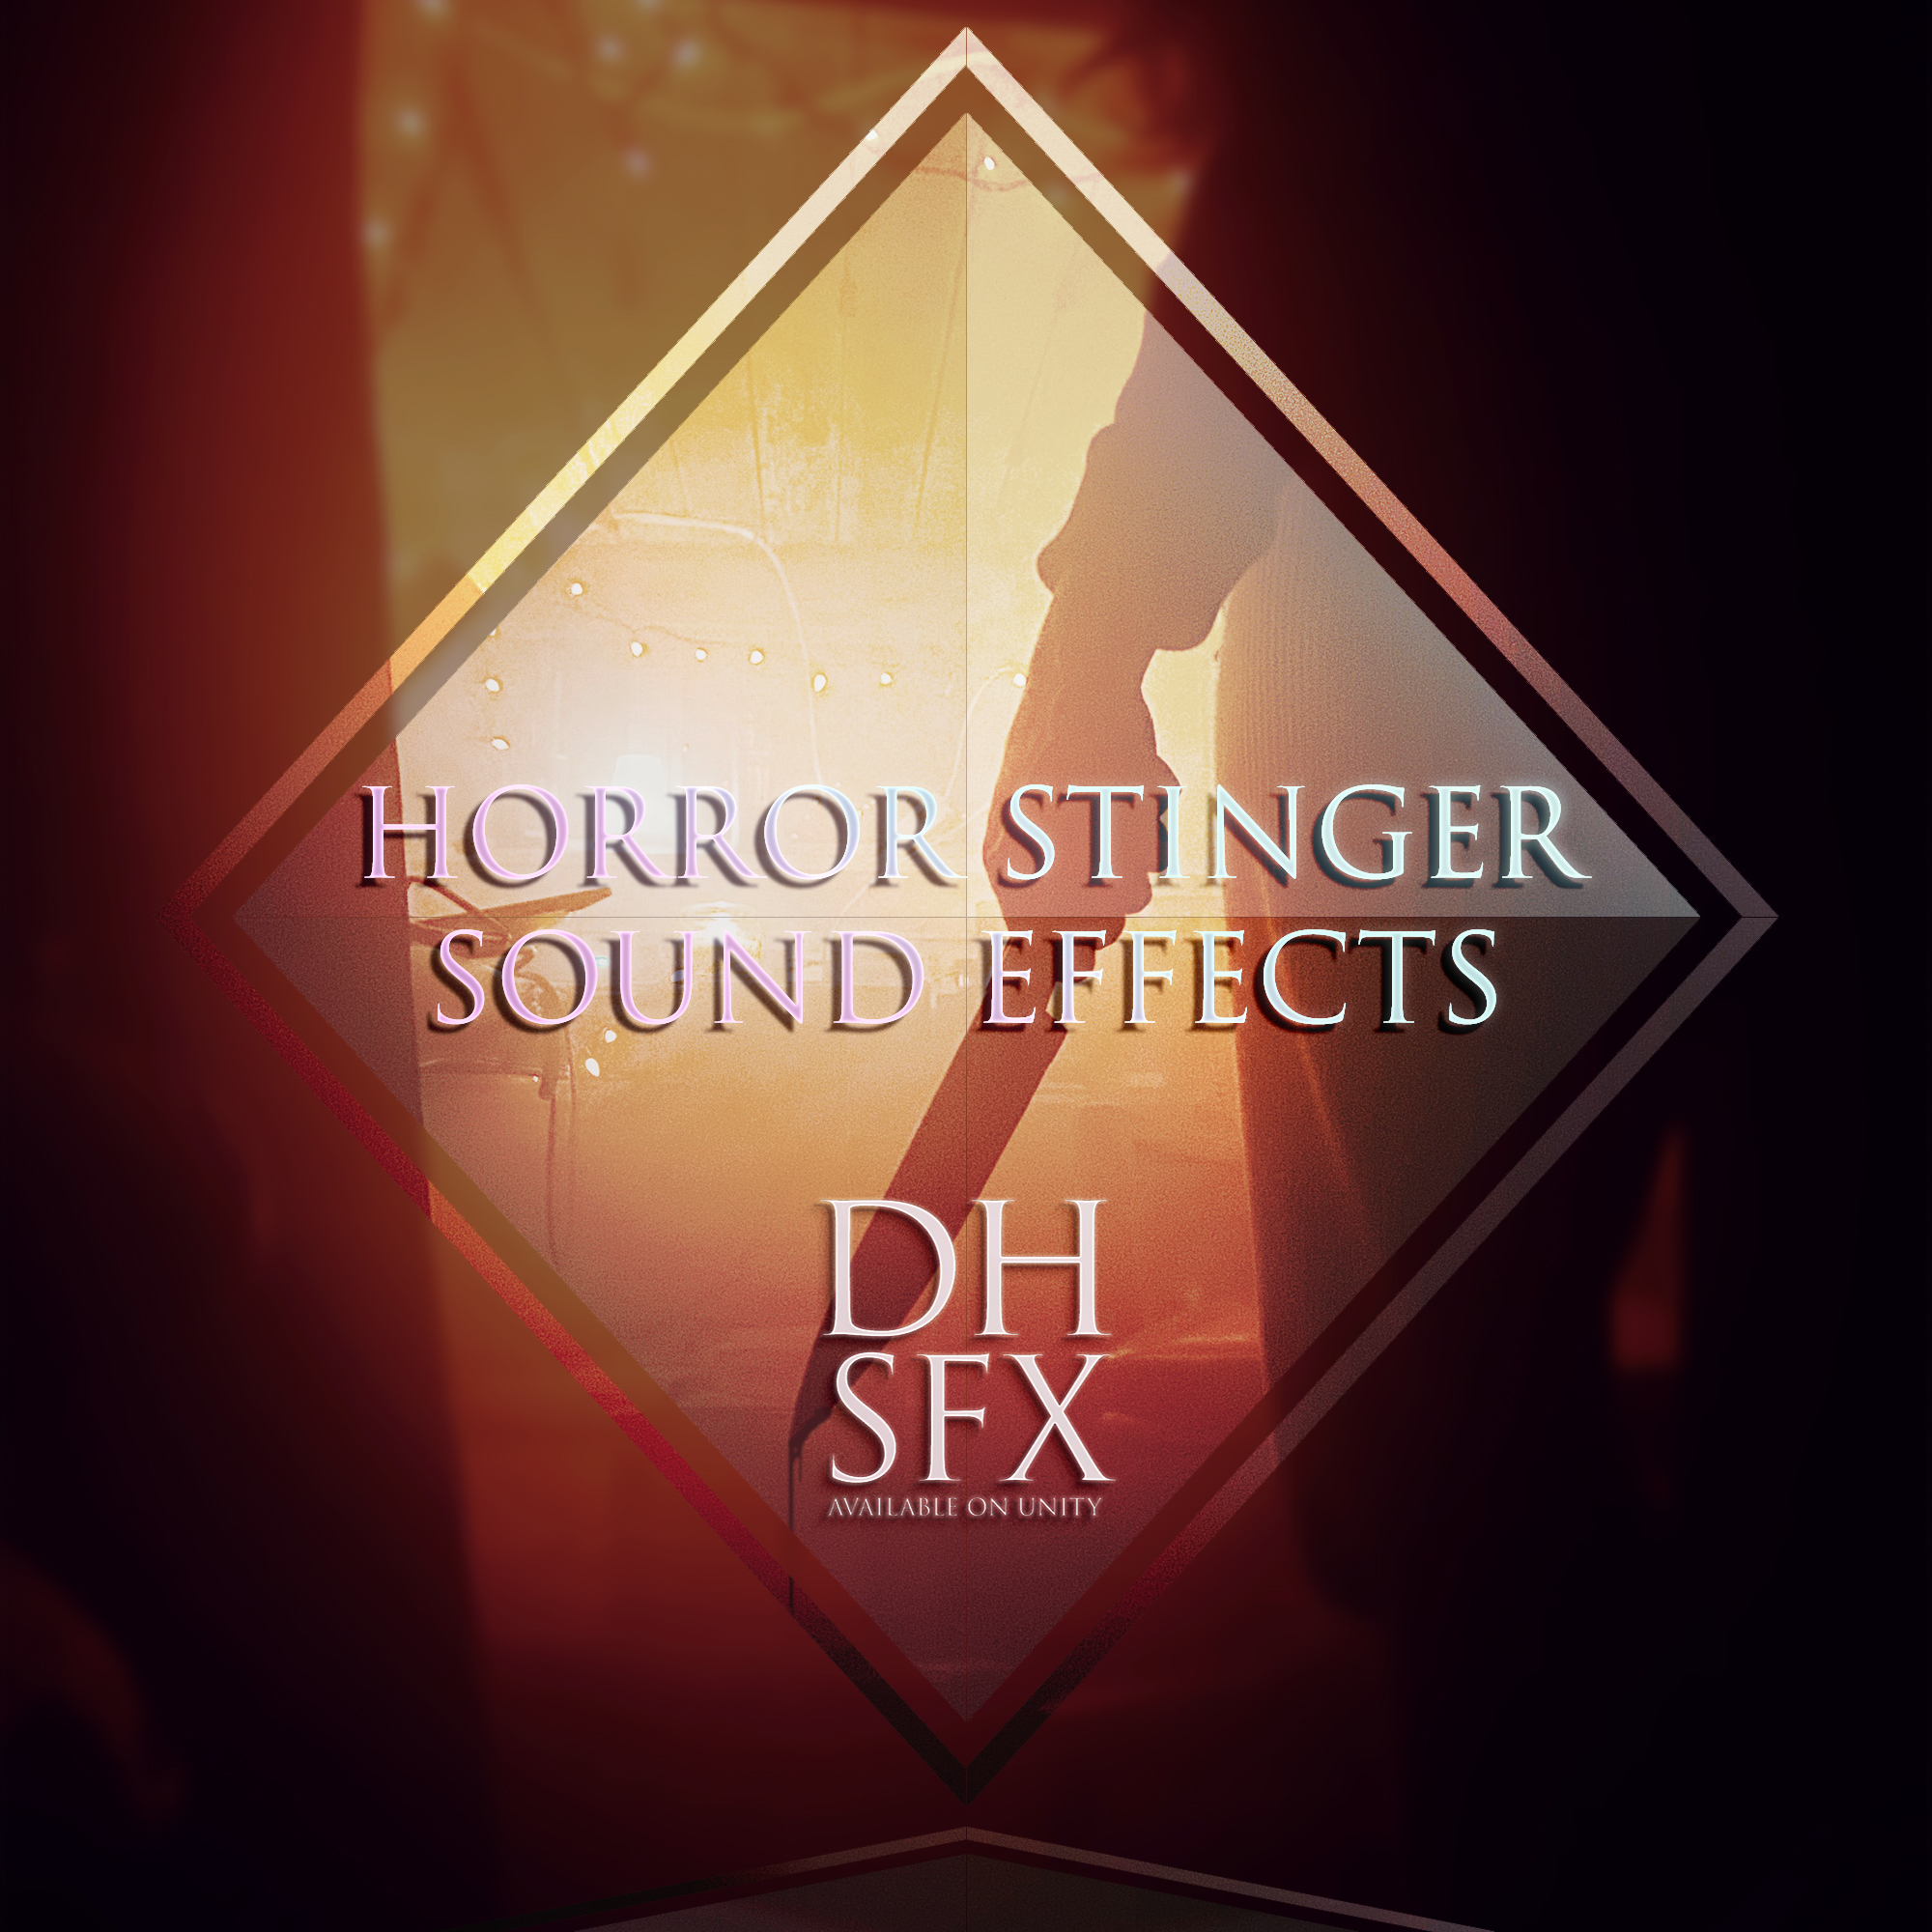 Horror Stinger Sound Effects